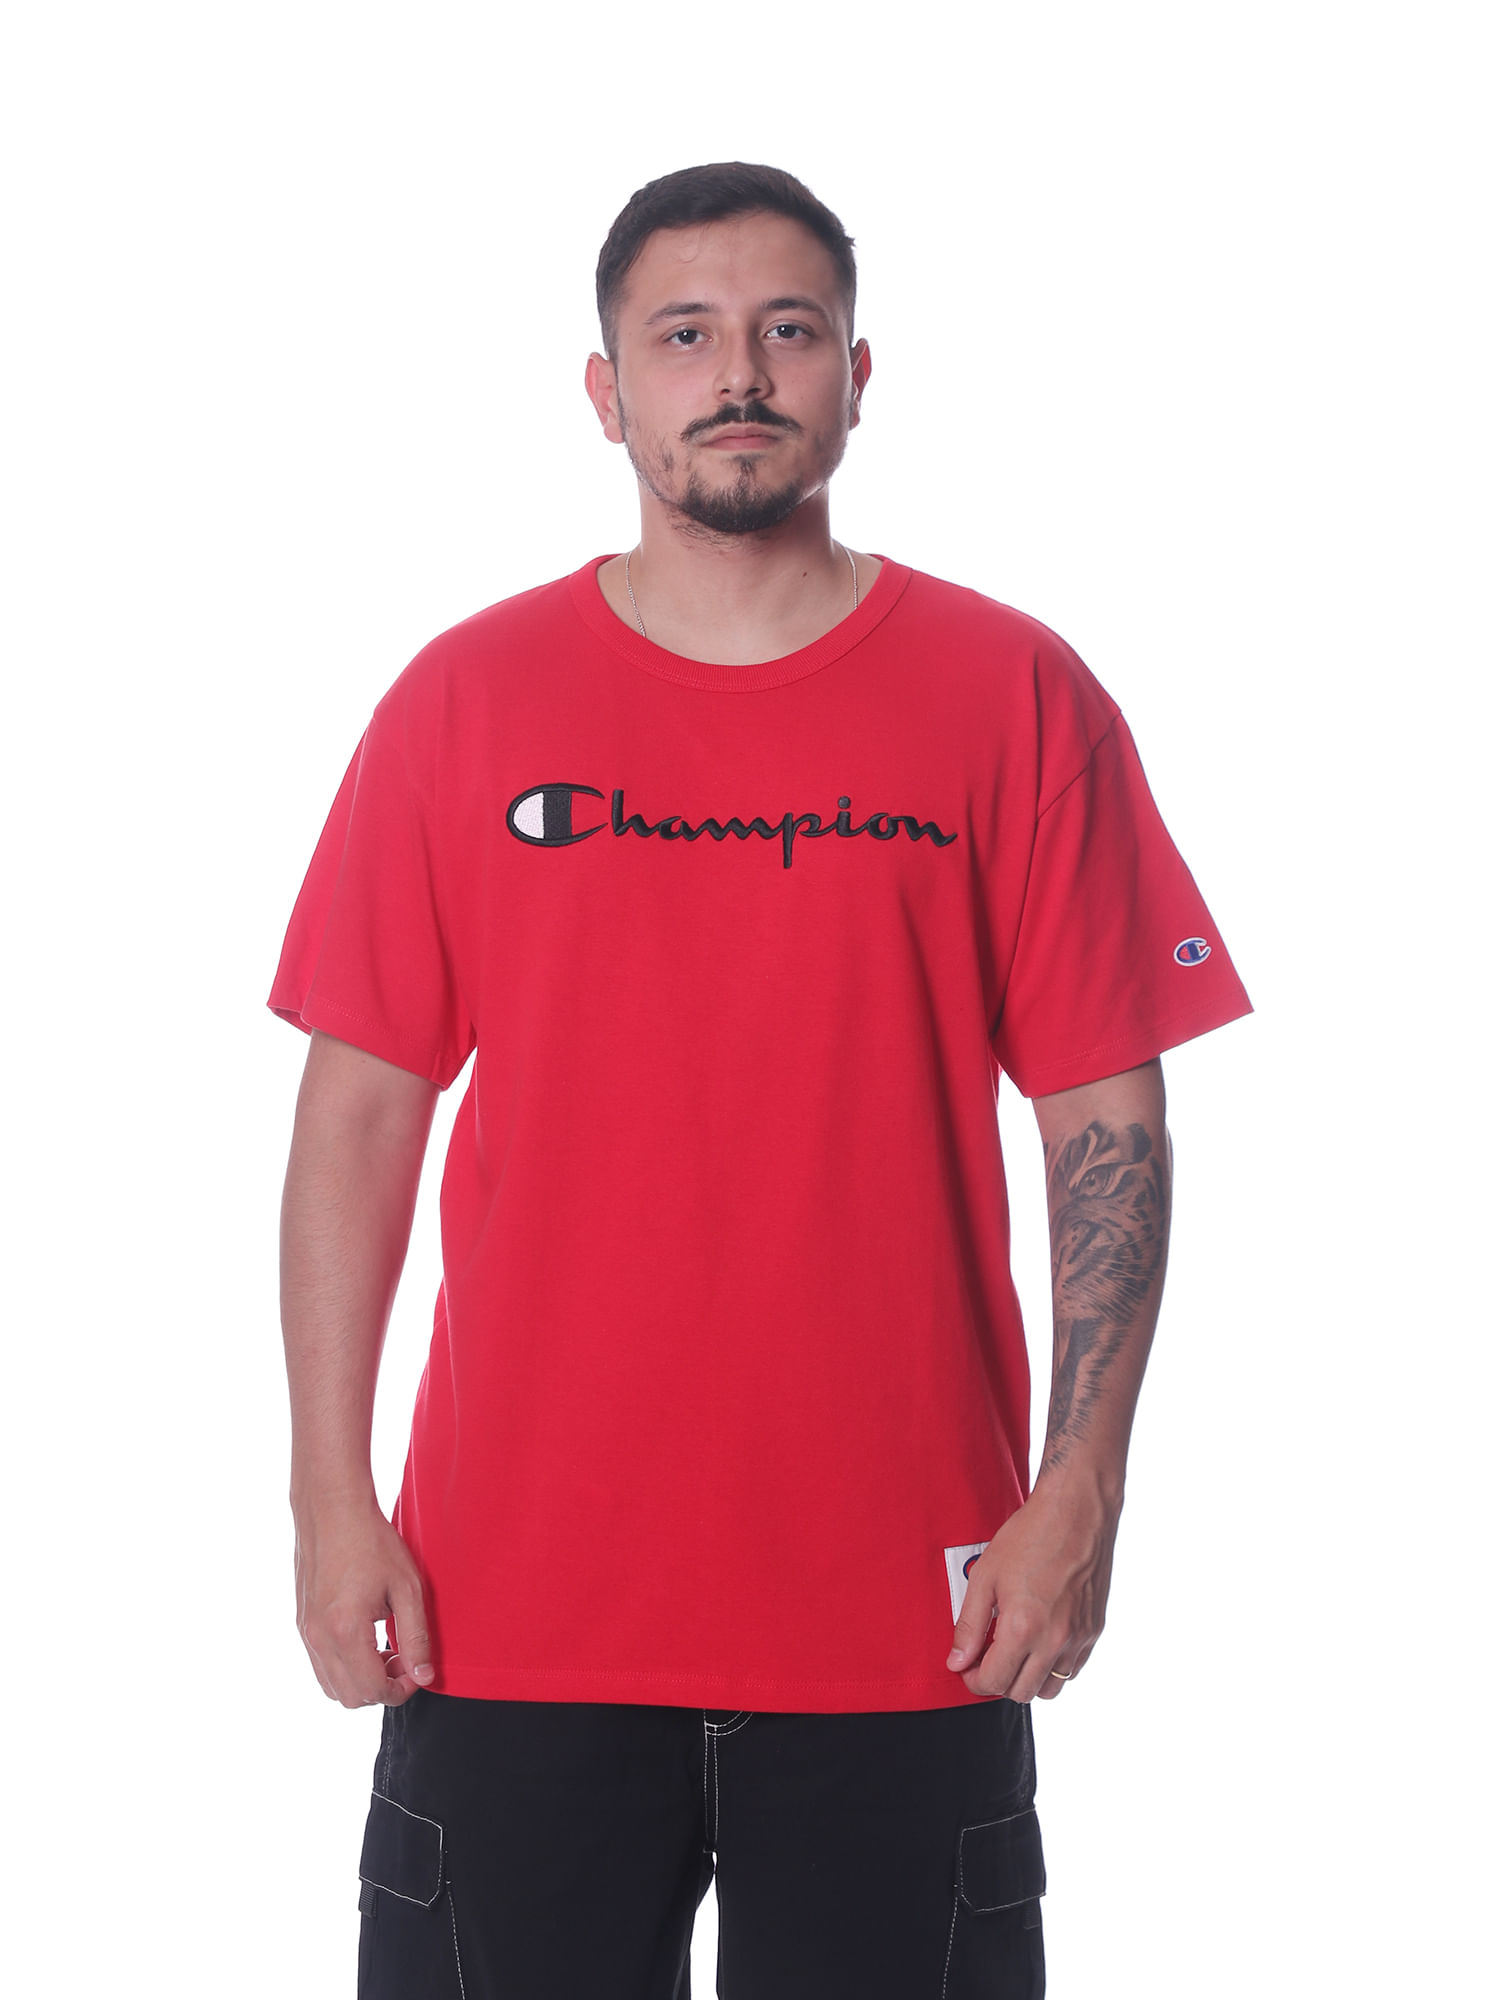 Camiseta-champion-logo-embroidery-script-Red-scarlet